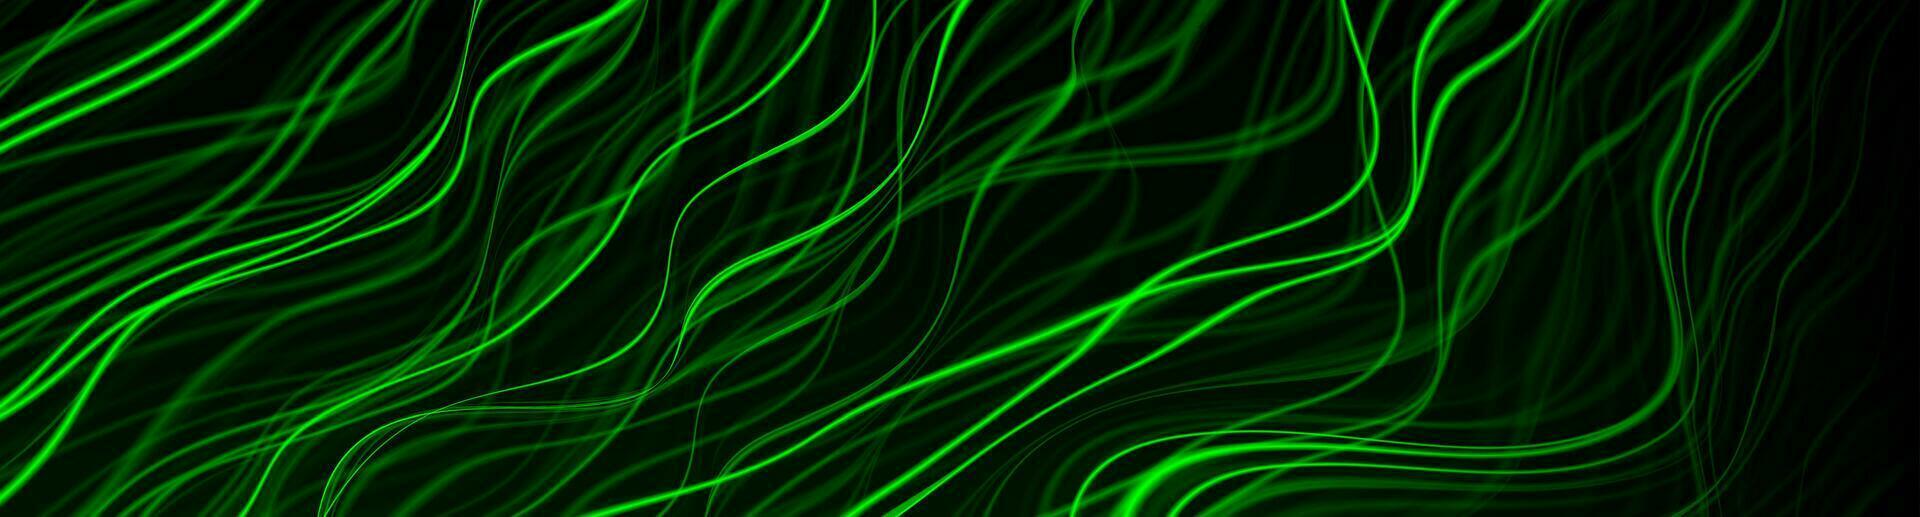 Green luminous glowing liquid wavy lines abstract neon lights background vector